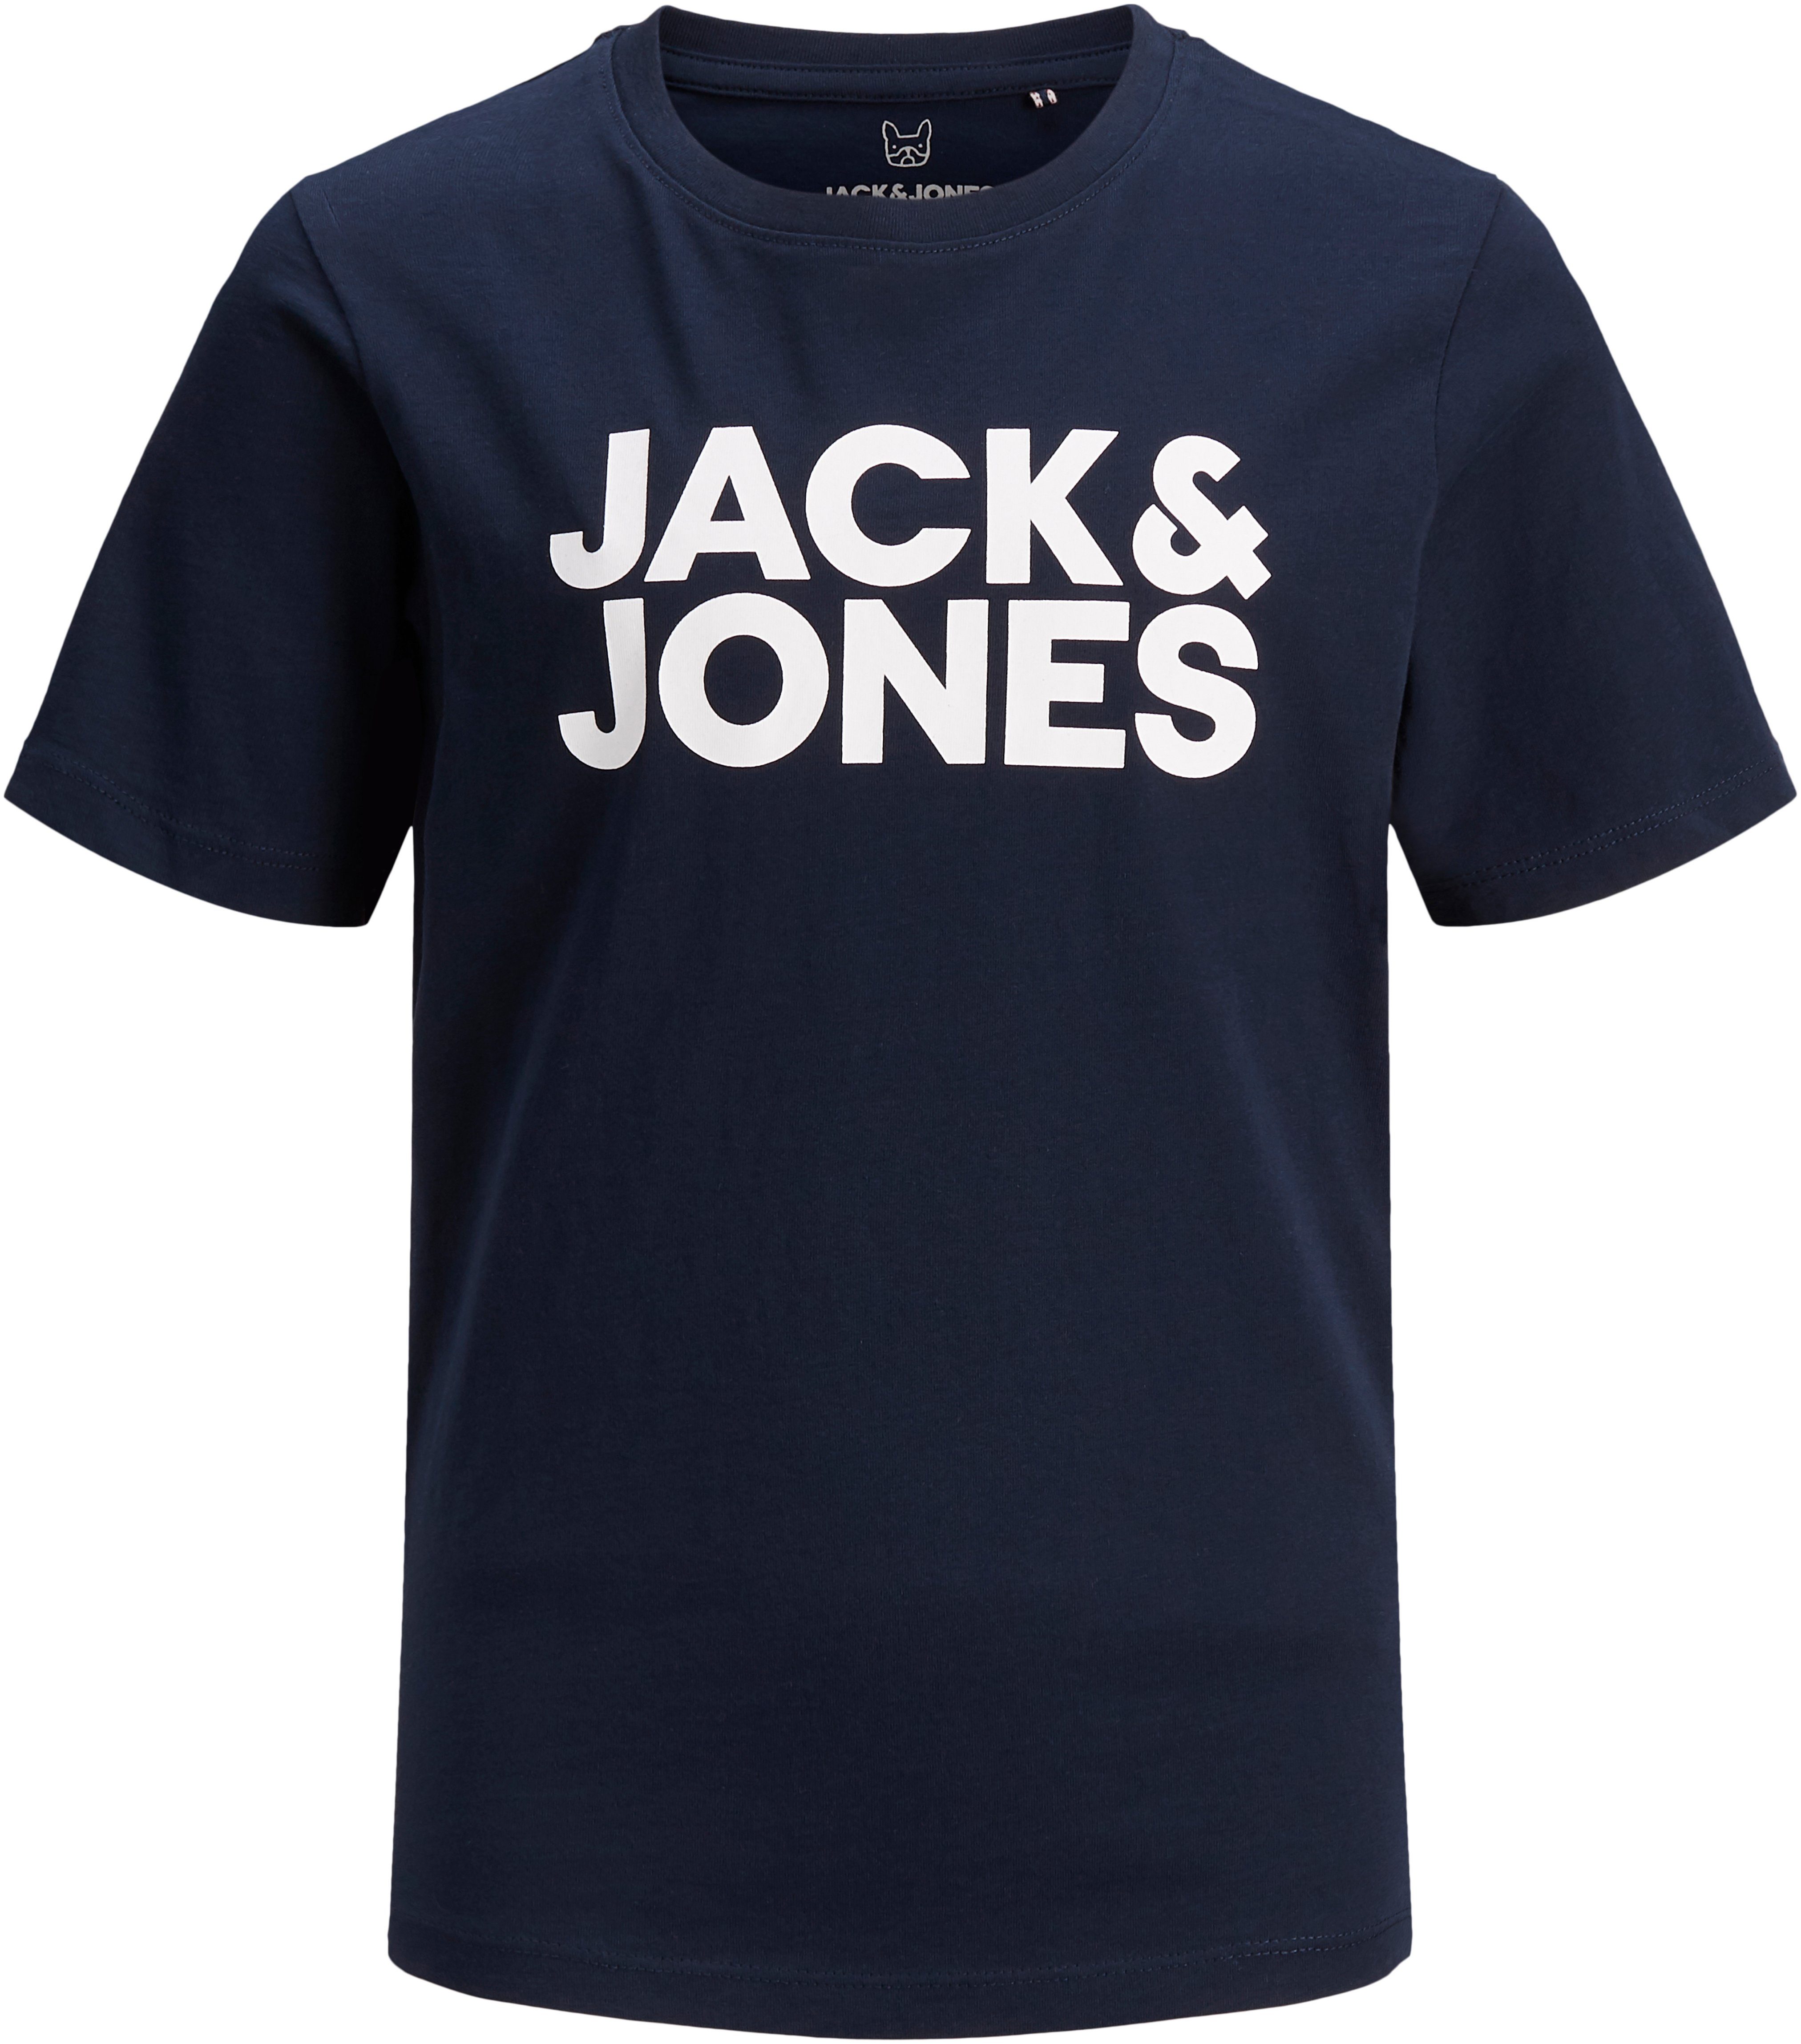 & navy blazer/Large Print T-Shirt Jones Jack Junior